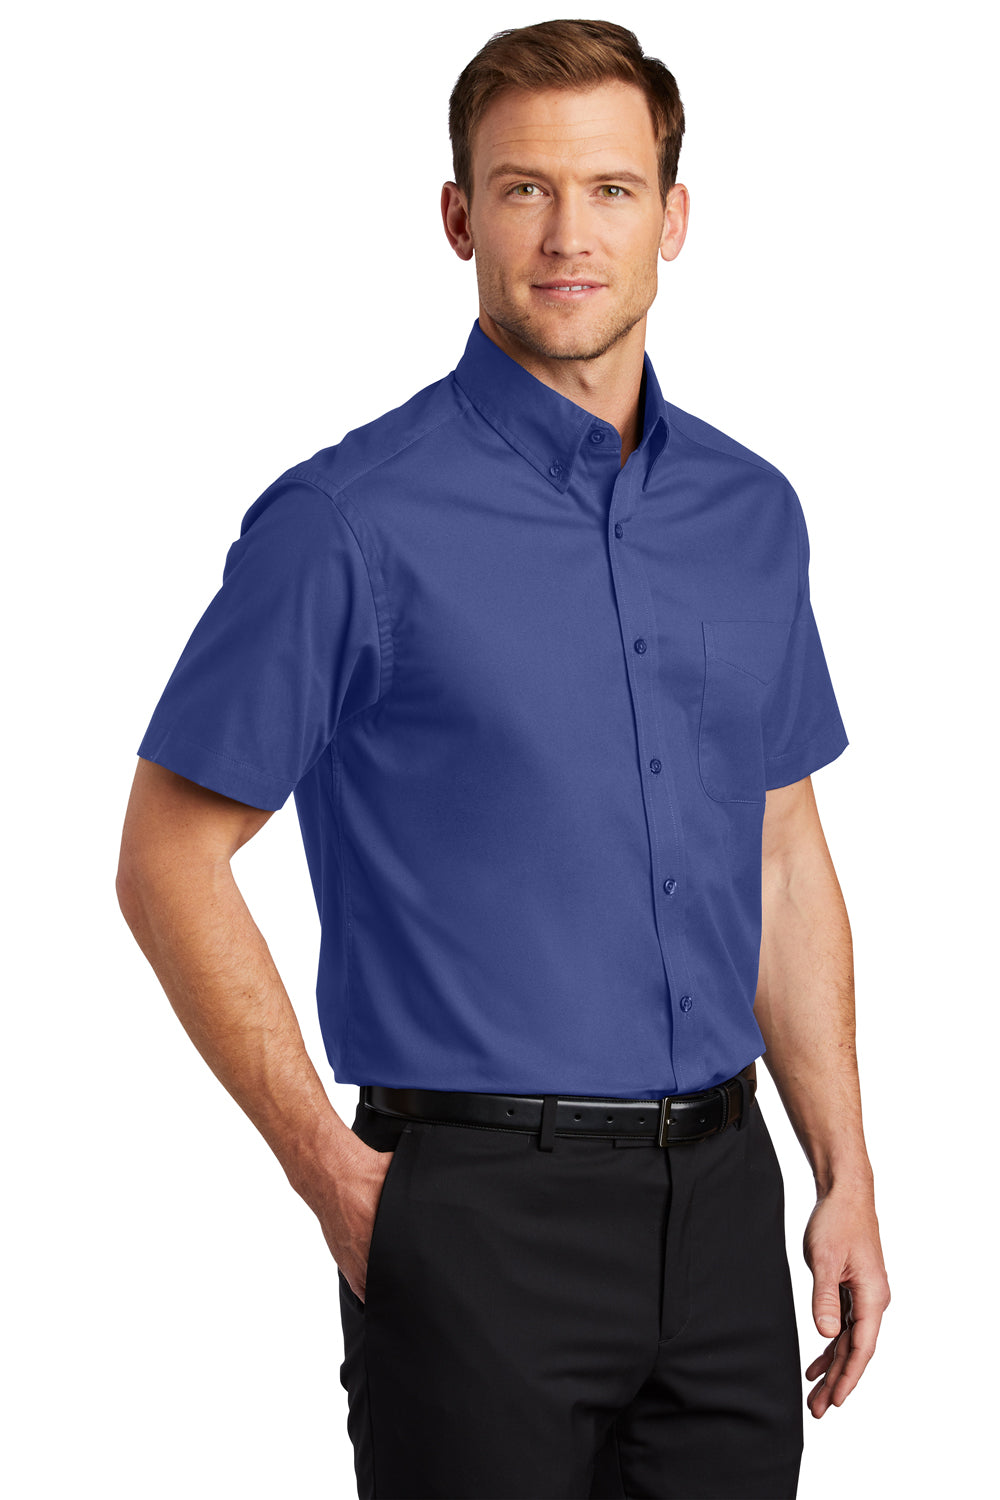 Port Authority S508/TLS508 Mens Easy Care Wrinkle Resistant Short Sleeve Button Down Shirt w/ Pocket Mediterranean Blue 3Q